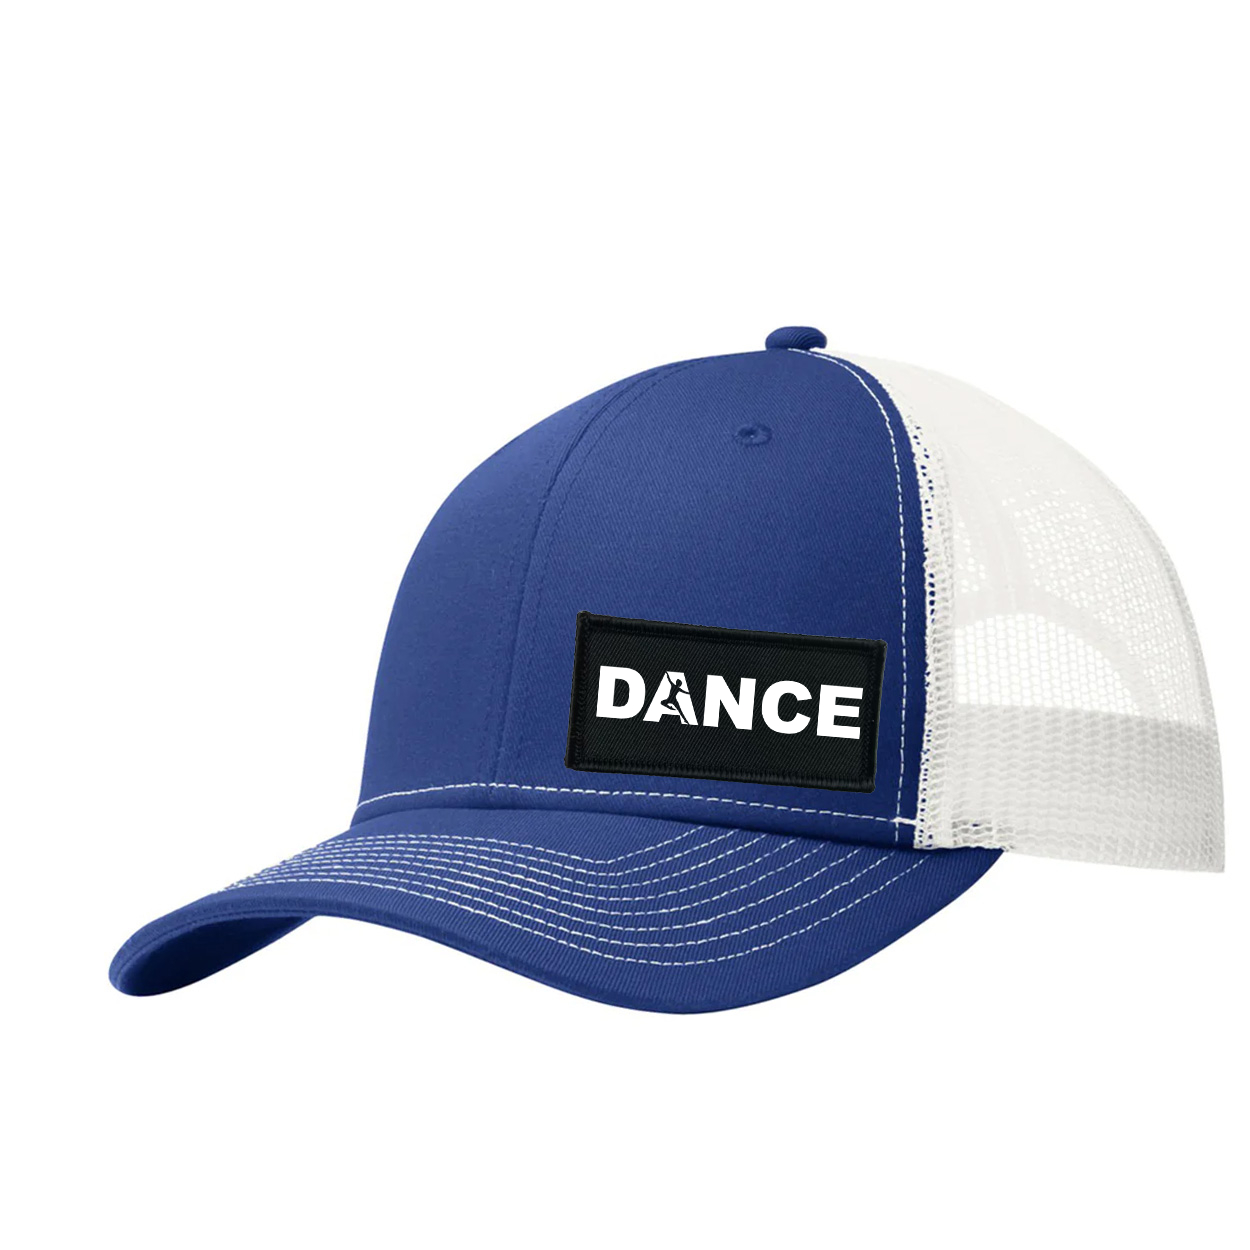 Dance Silhouette Logo Night Out Woven Patch Snapback Trucker Hat Dark Royal/White (White Logo)